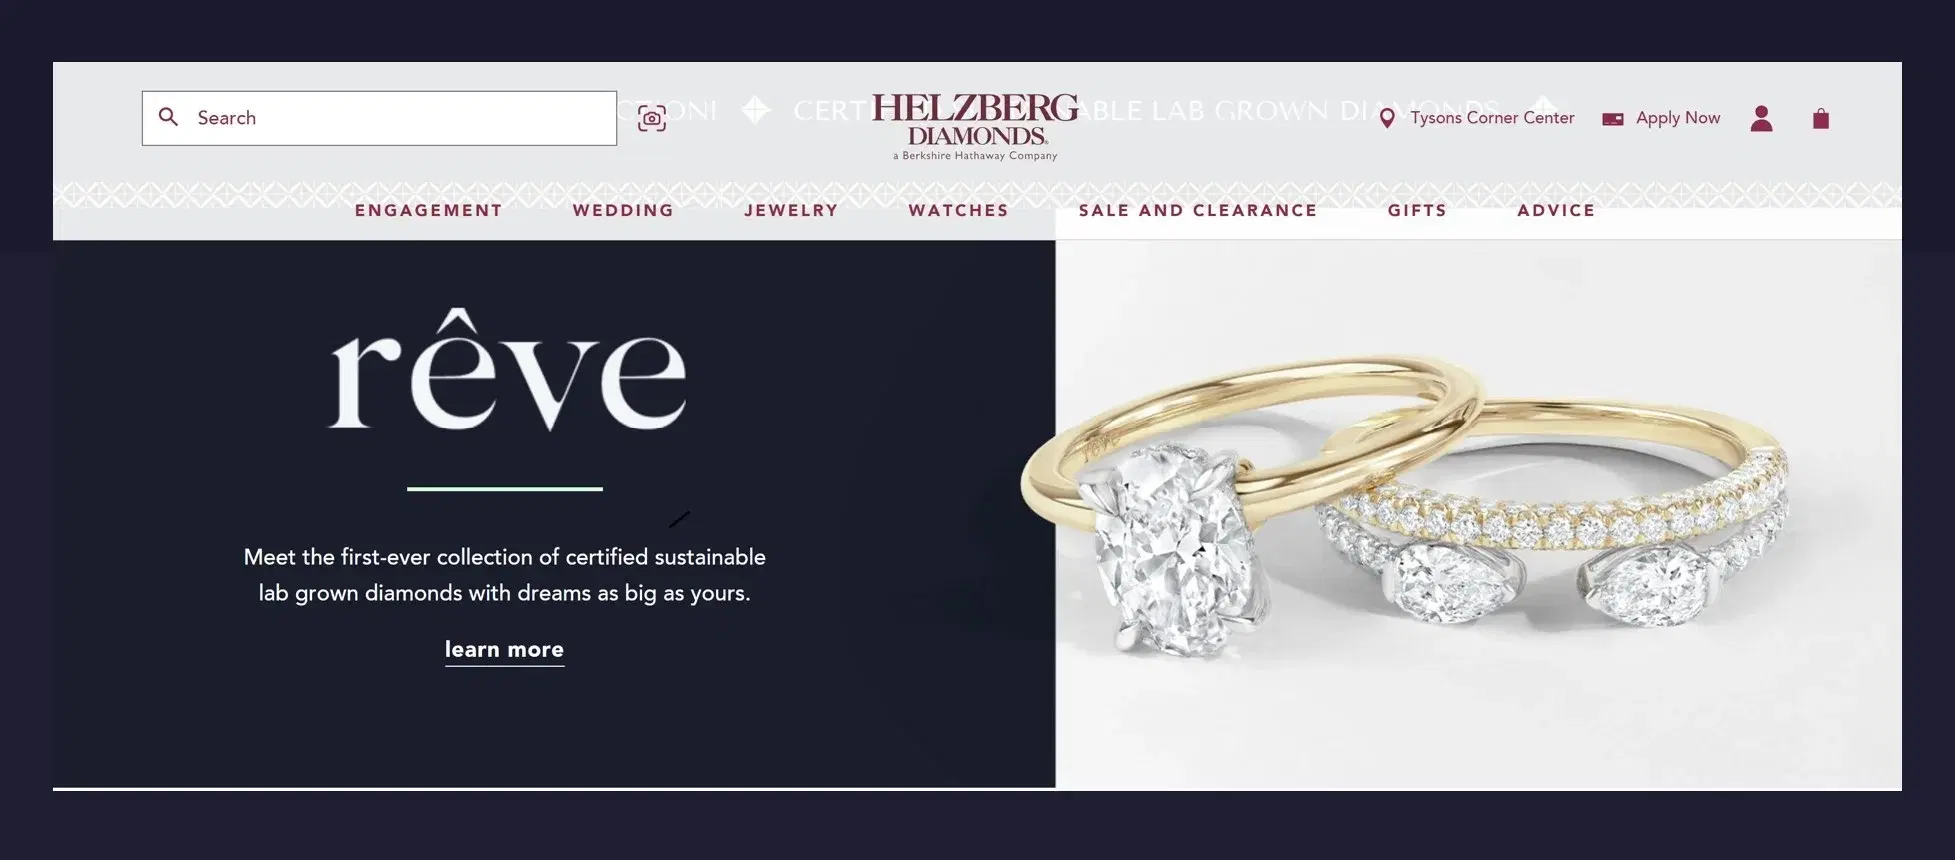 Helzberg Diamonds Review: Too Overpriced?